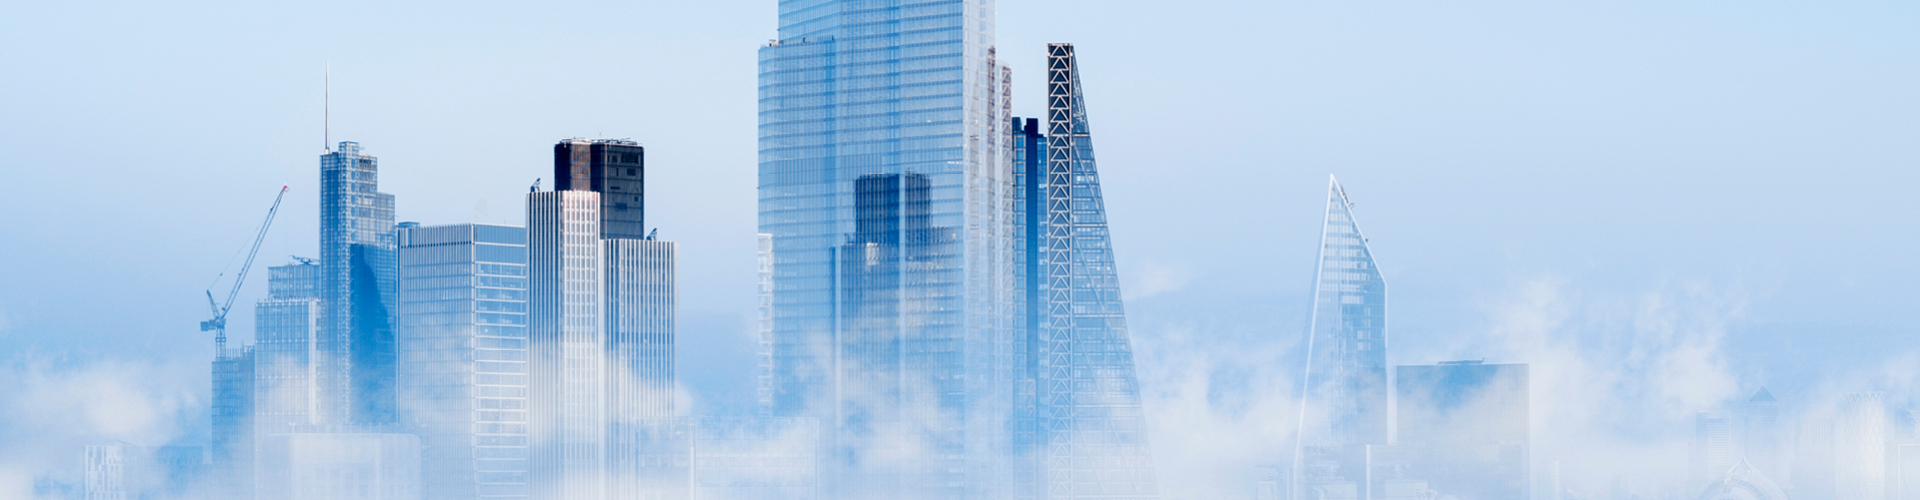 London skyline in a foggy day